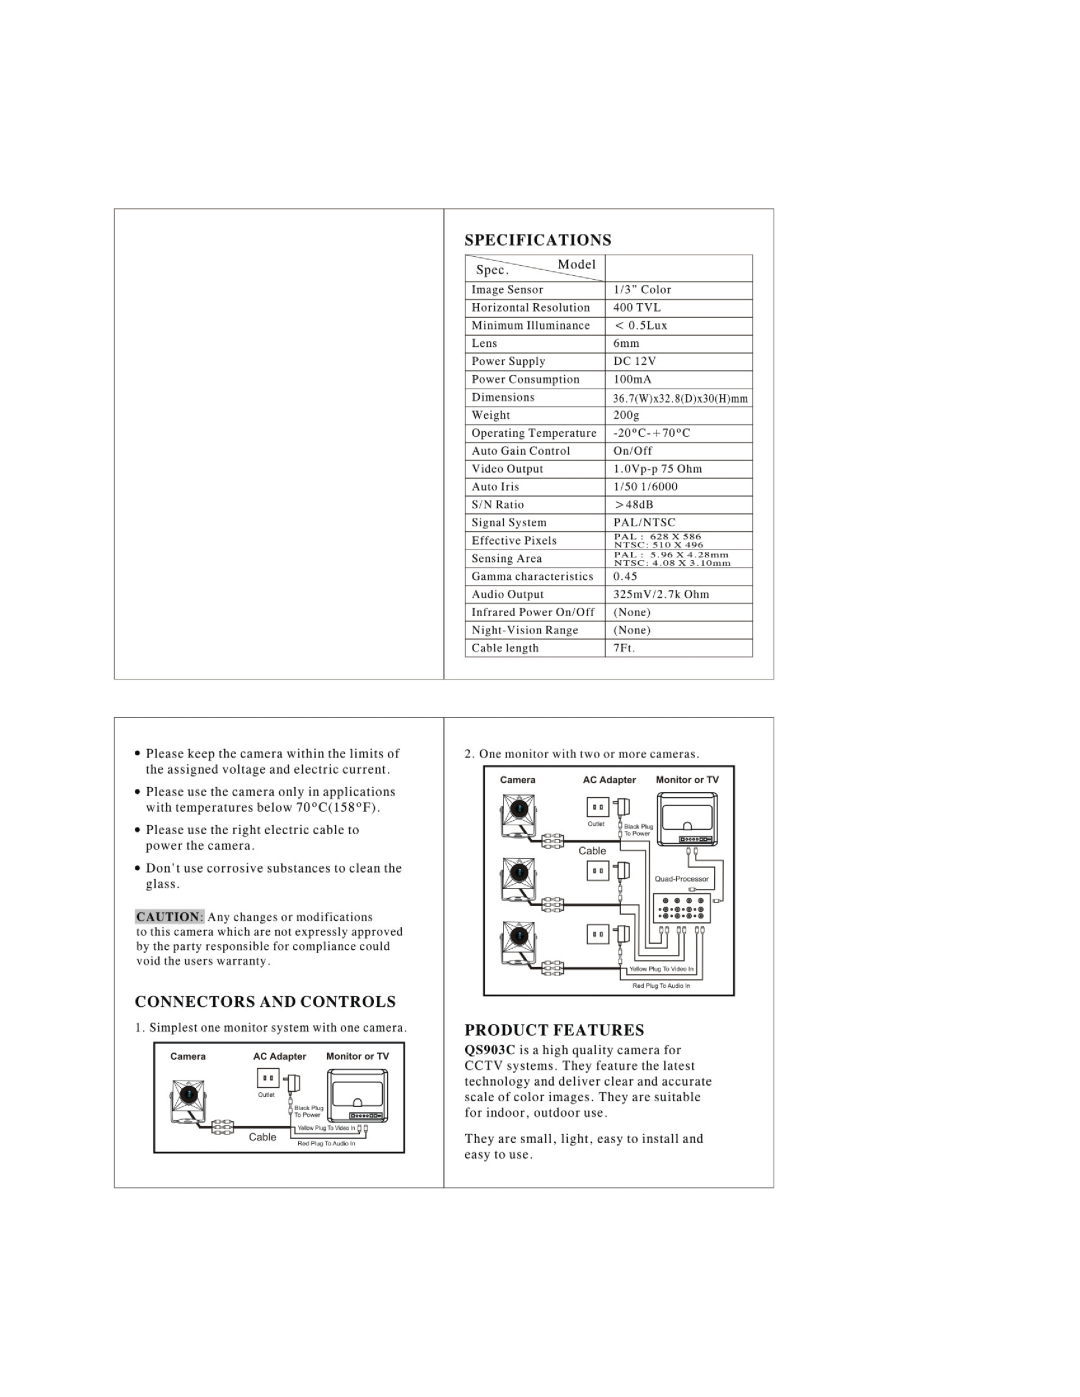 Q-See Qs903c manual 